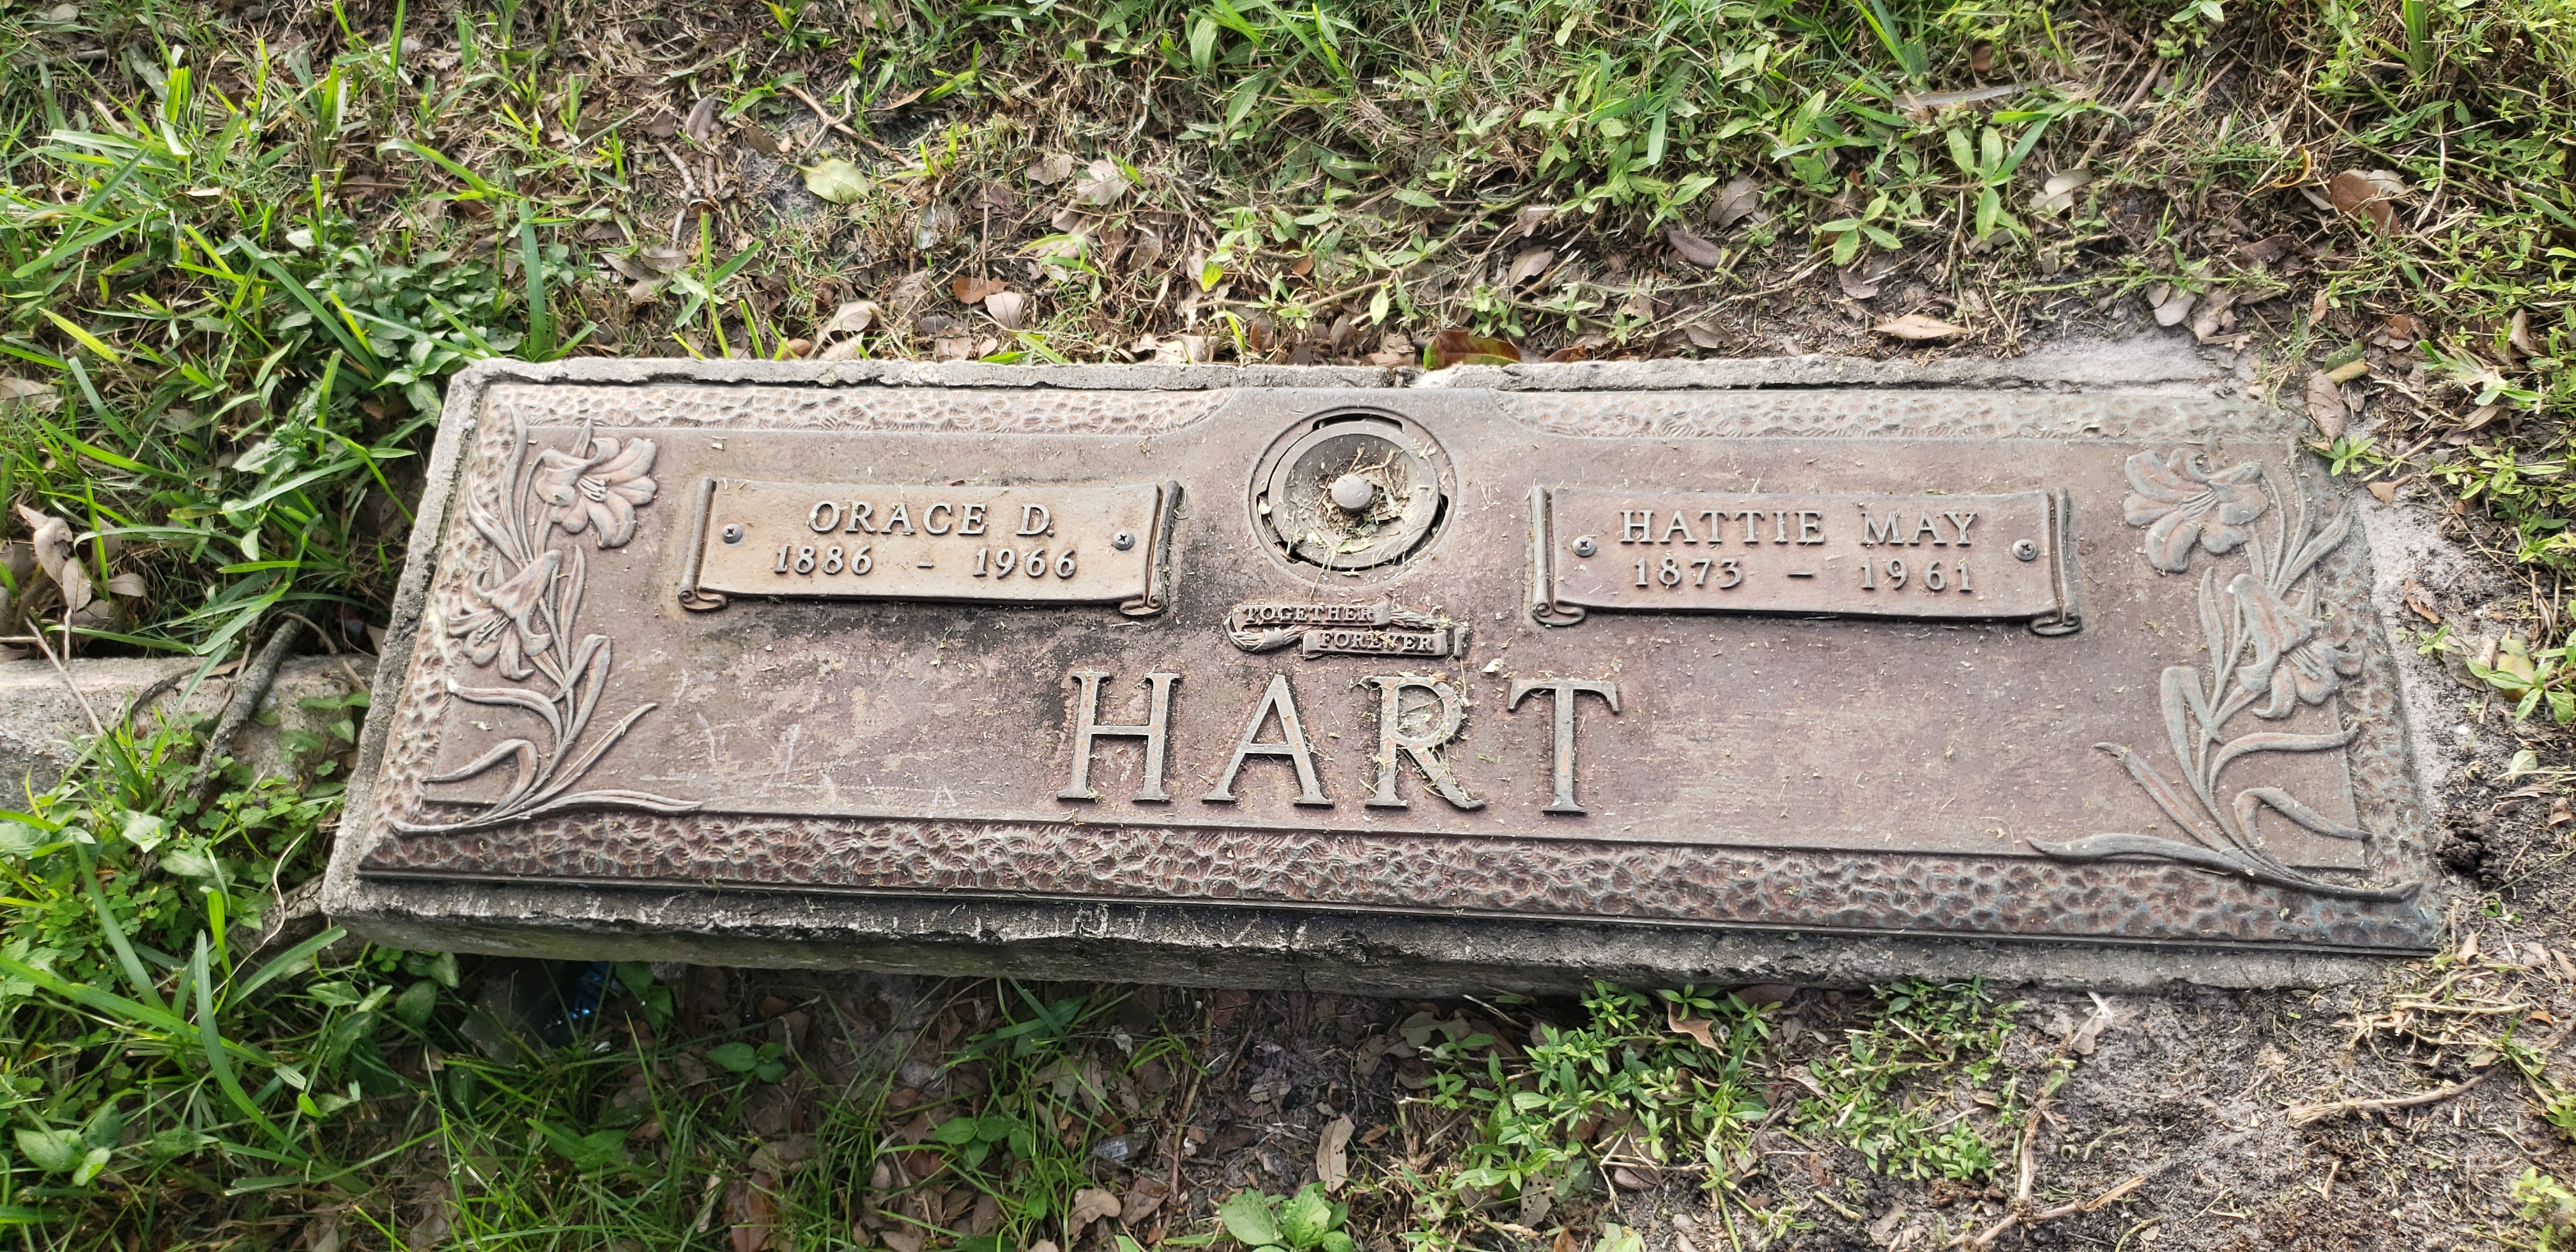 Hattie May Hart